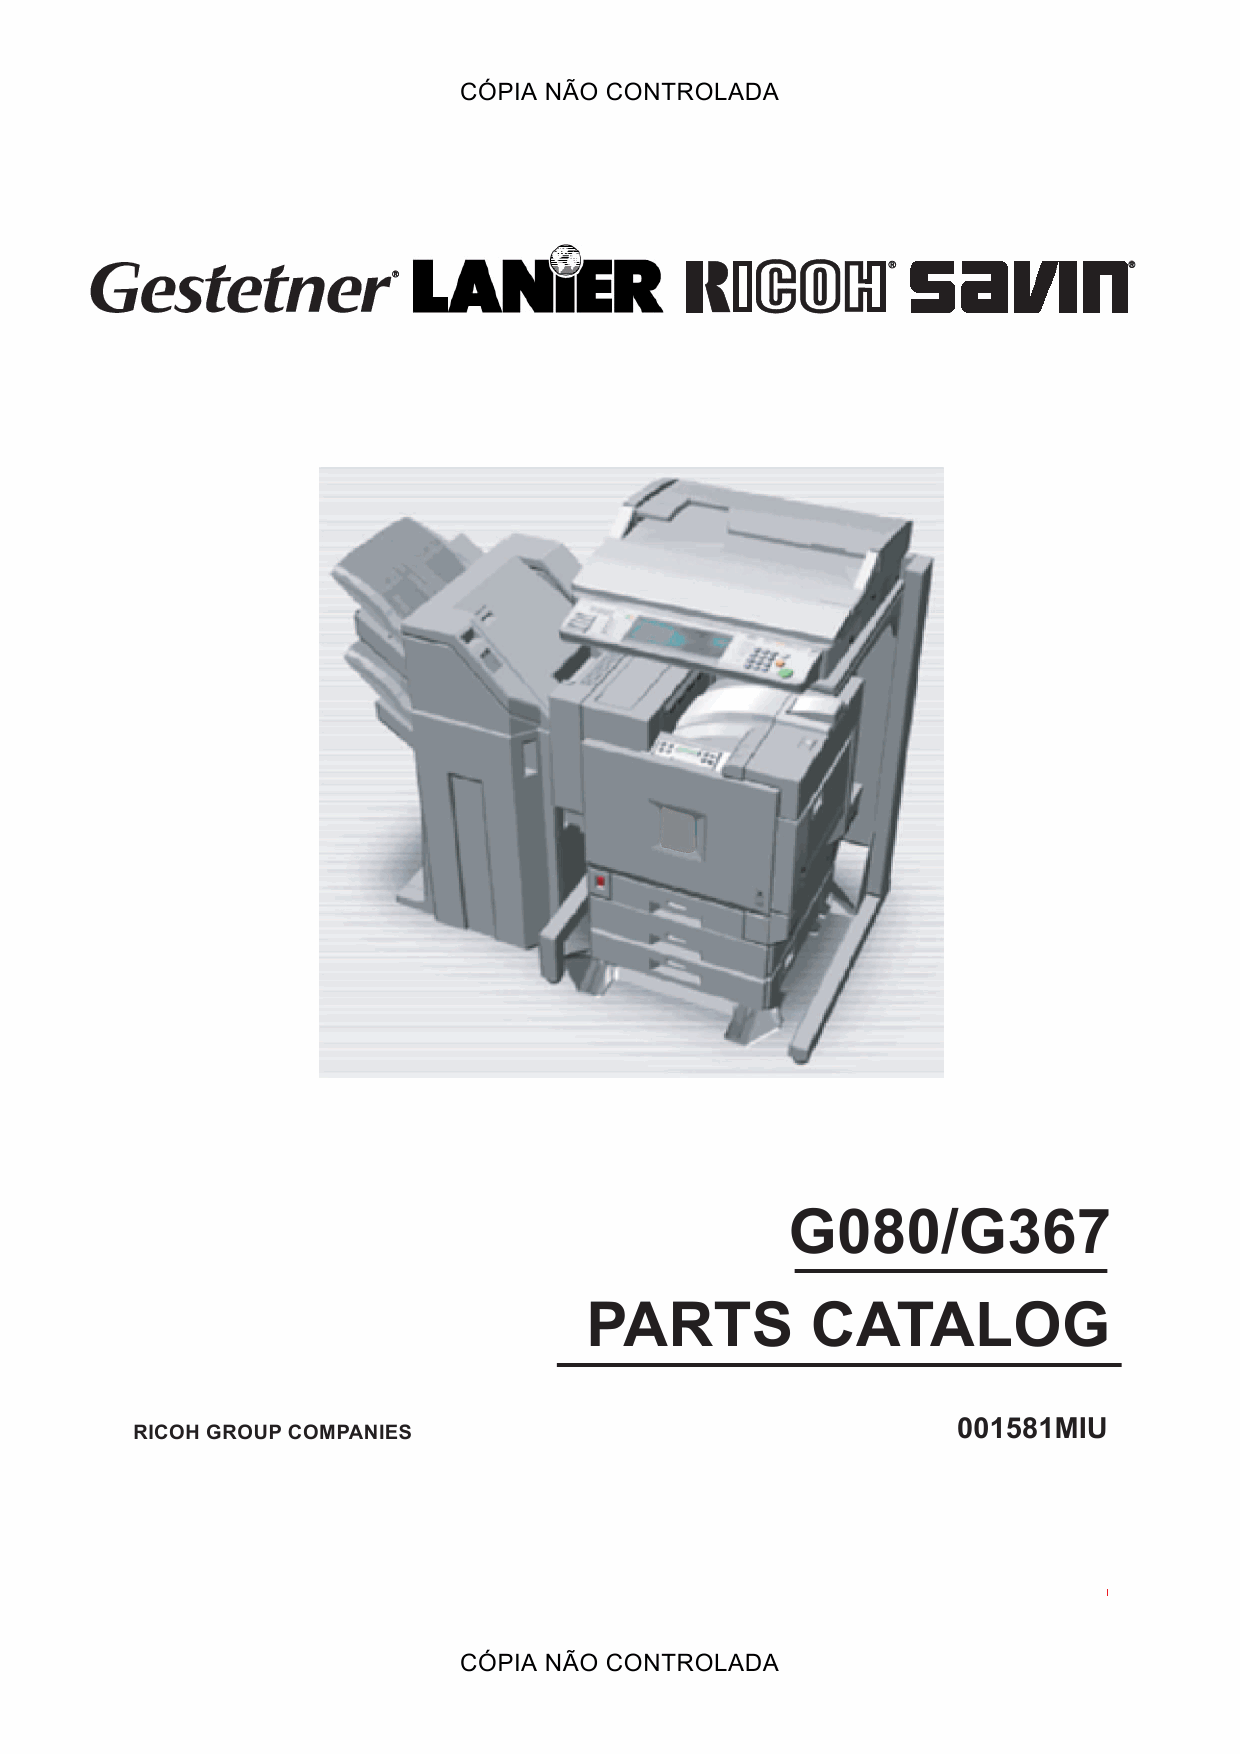 RICOH Aficio CL-7000 7000CMF G080 G367 Parts Catalog-1